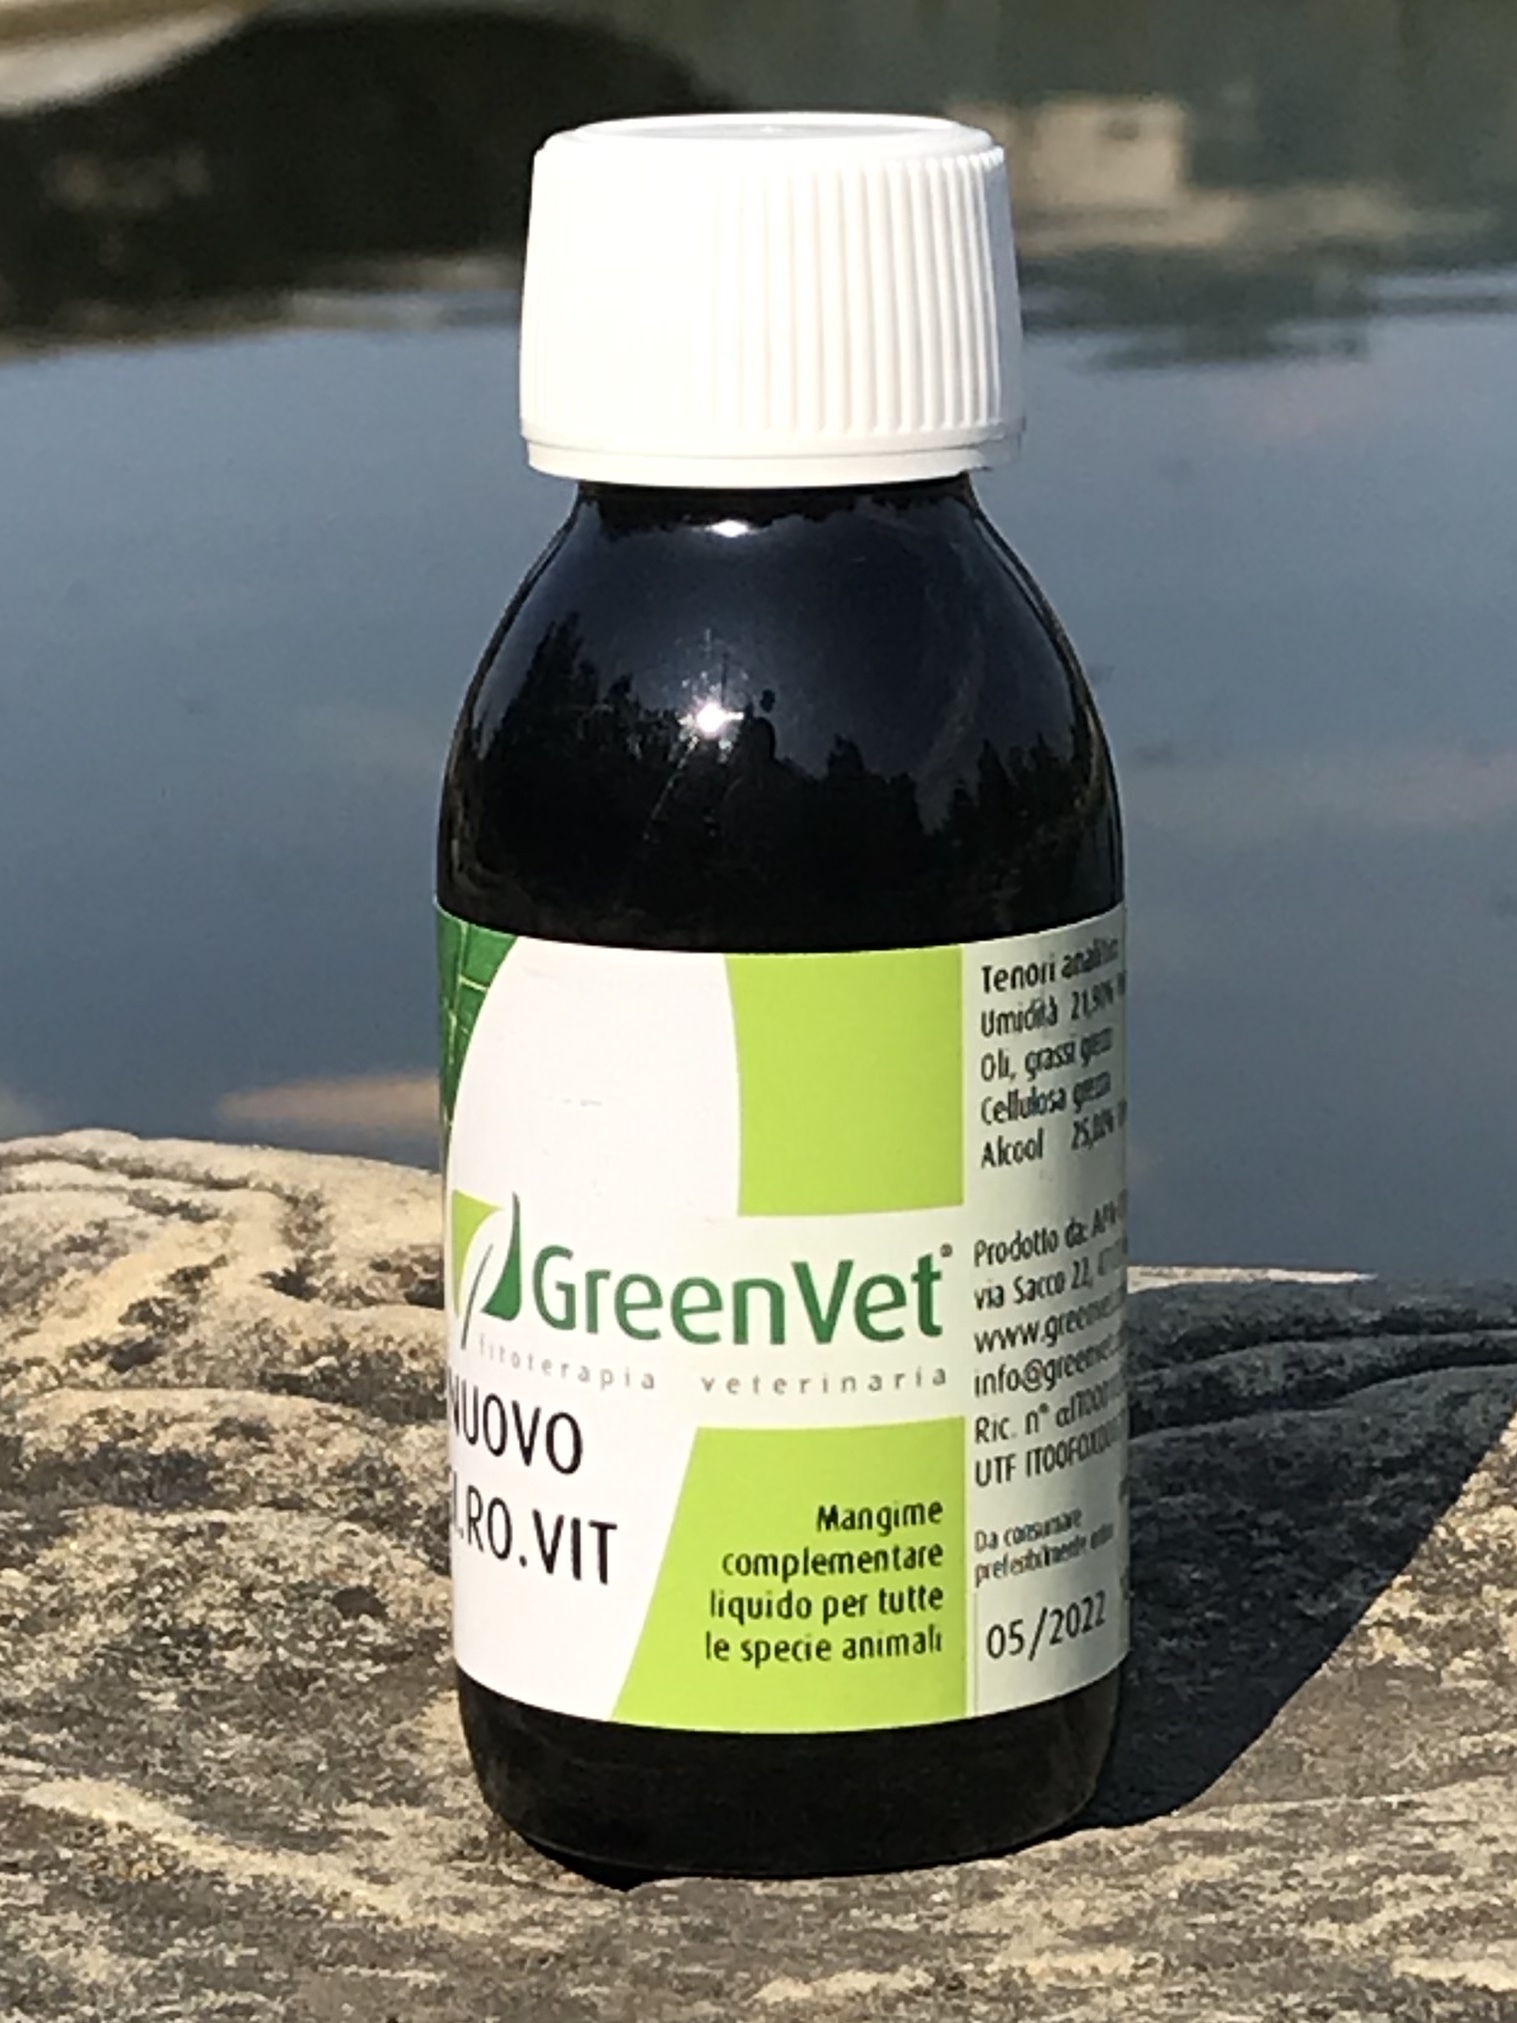 GreenVet nuovo Gi.Ro.Vit. 100 g